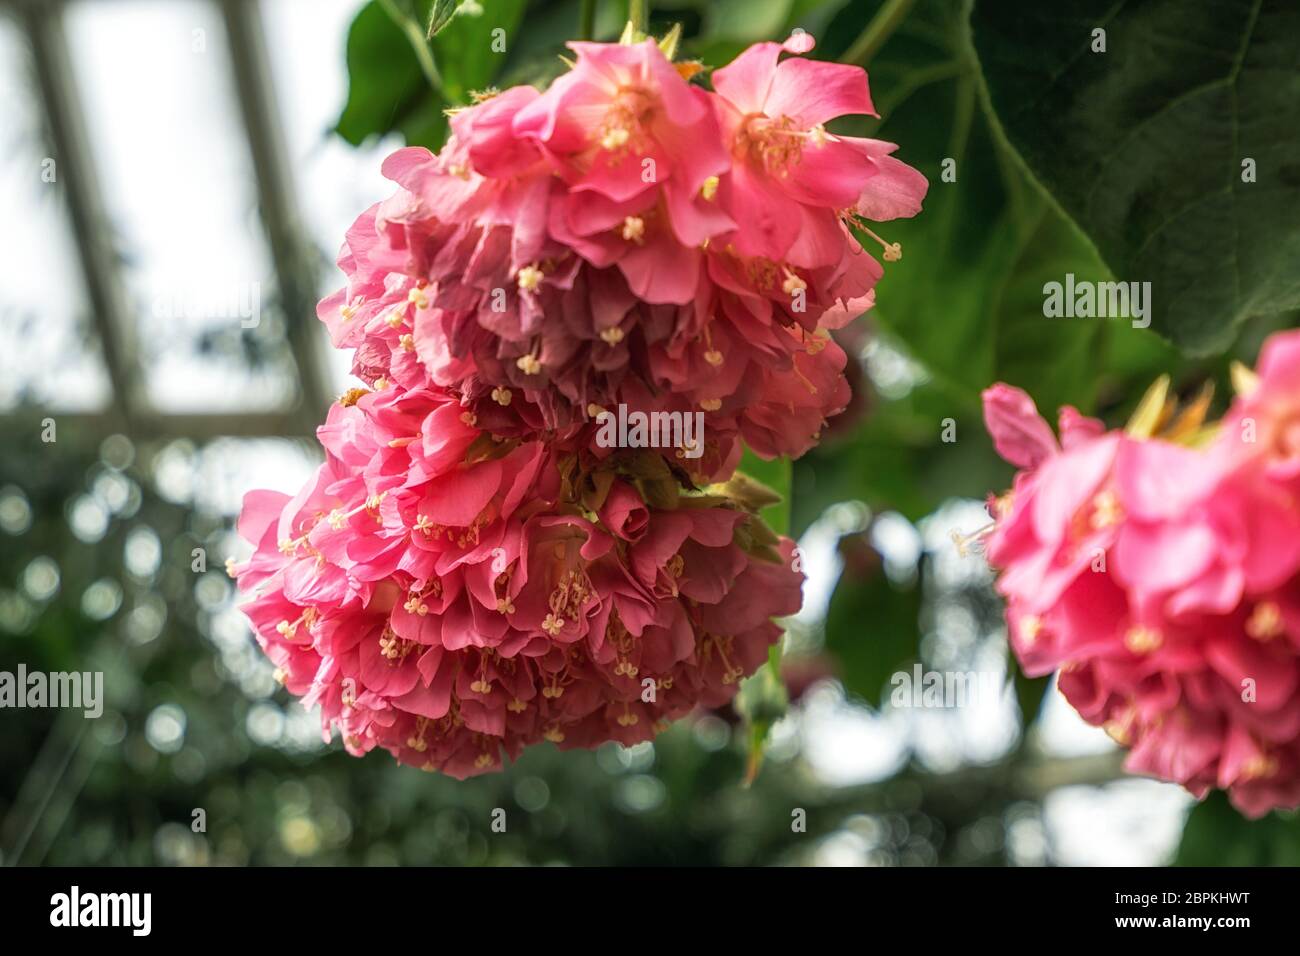 dombeya wallichii flower blossom taken in National Institute of Ecology in South Korea Stock Photo